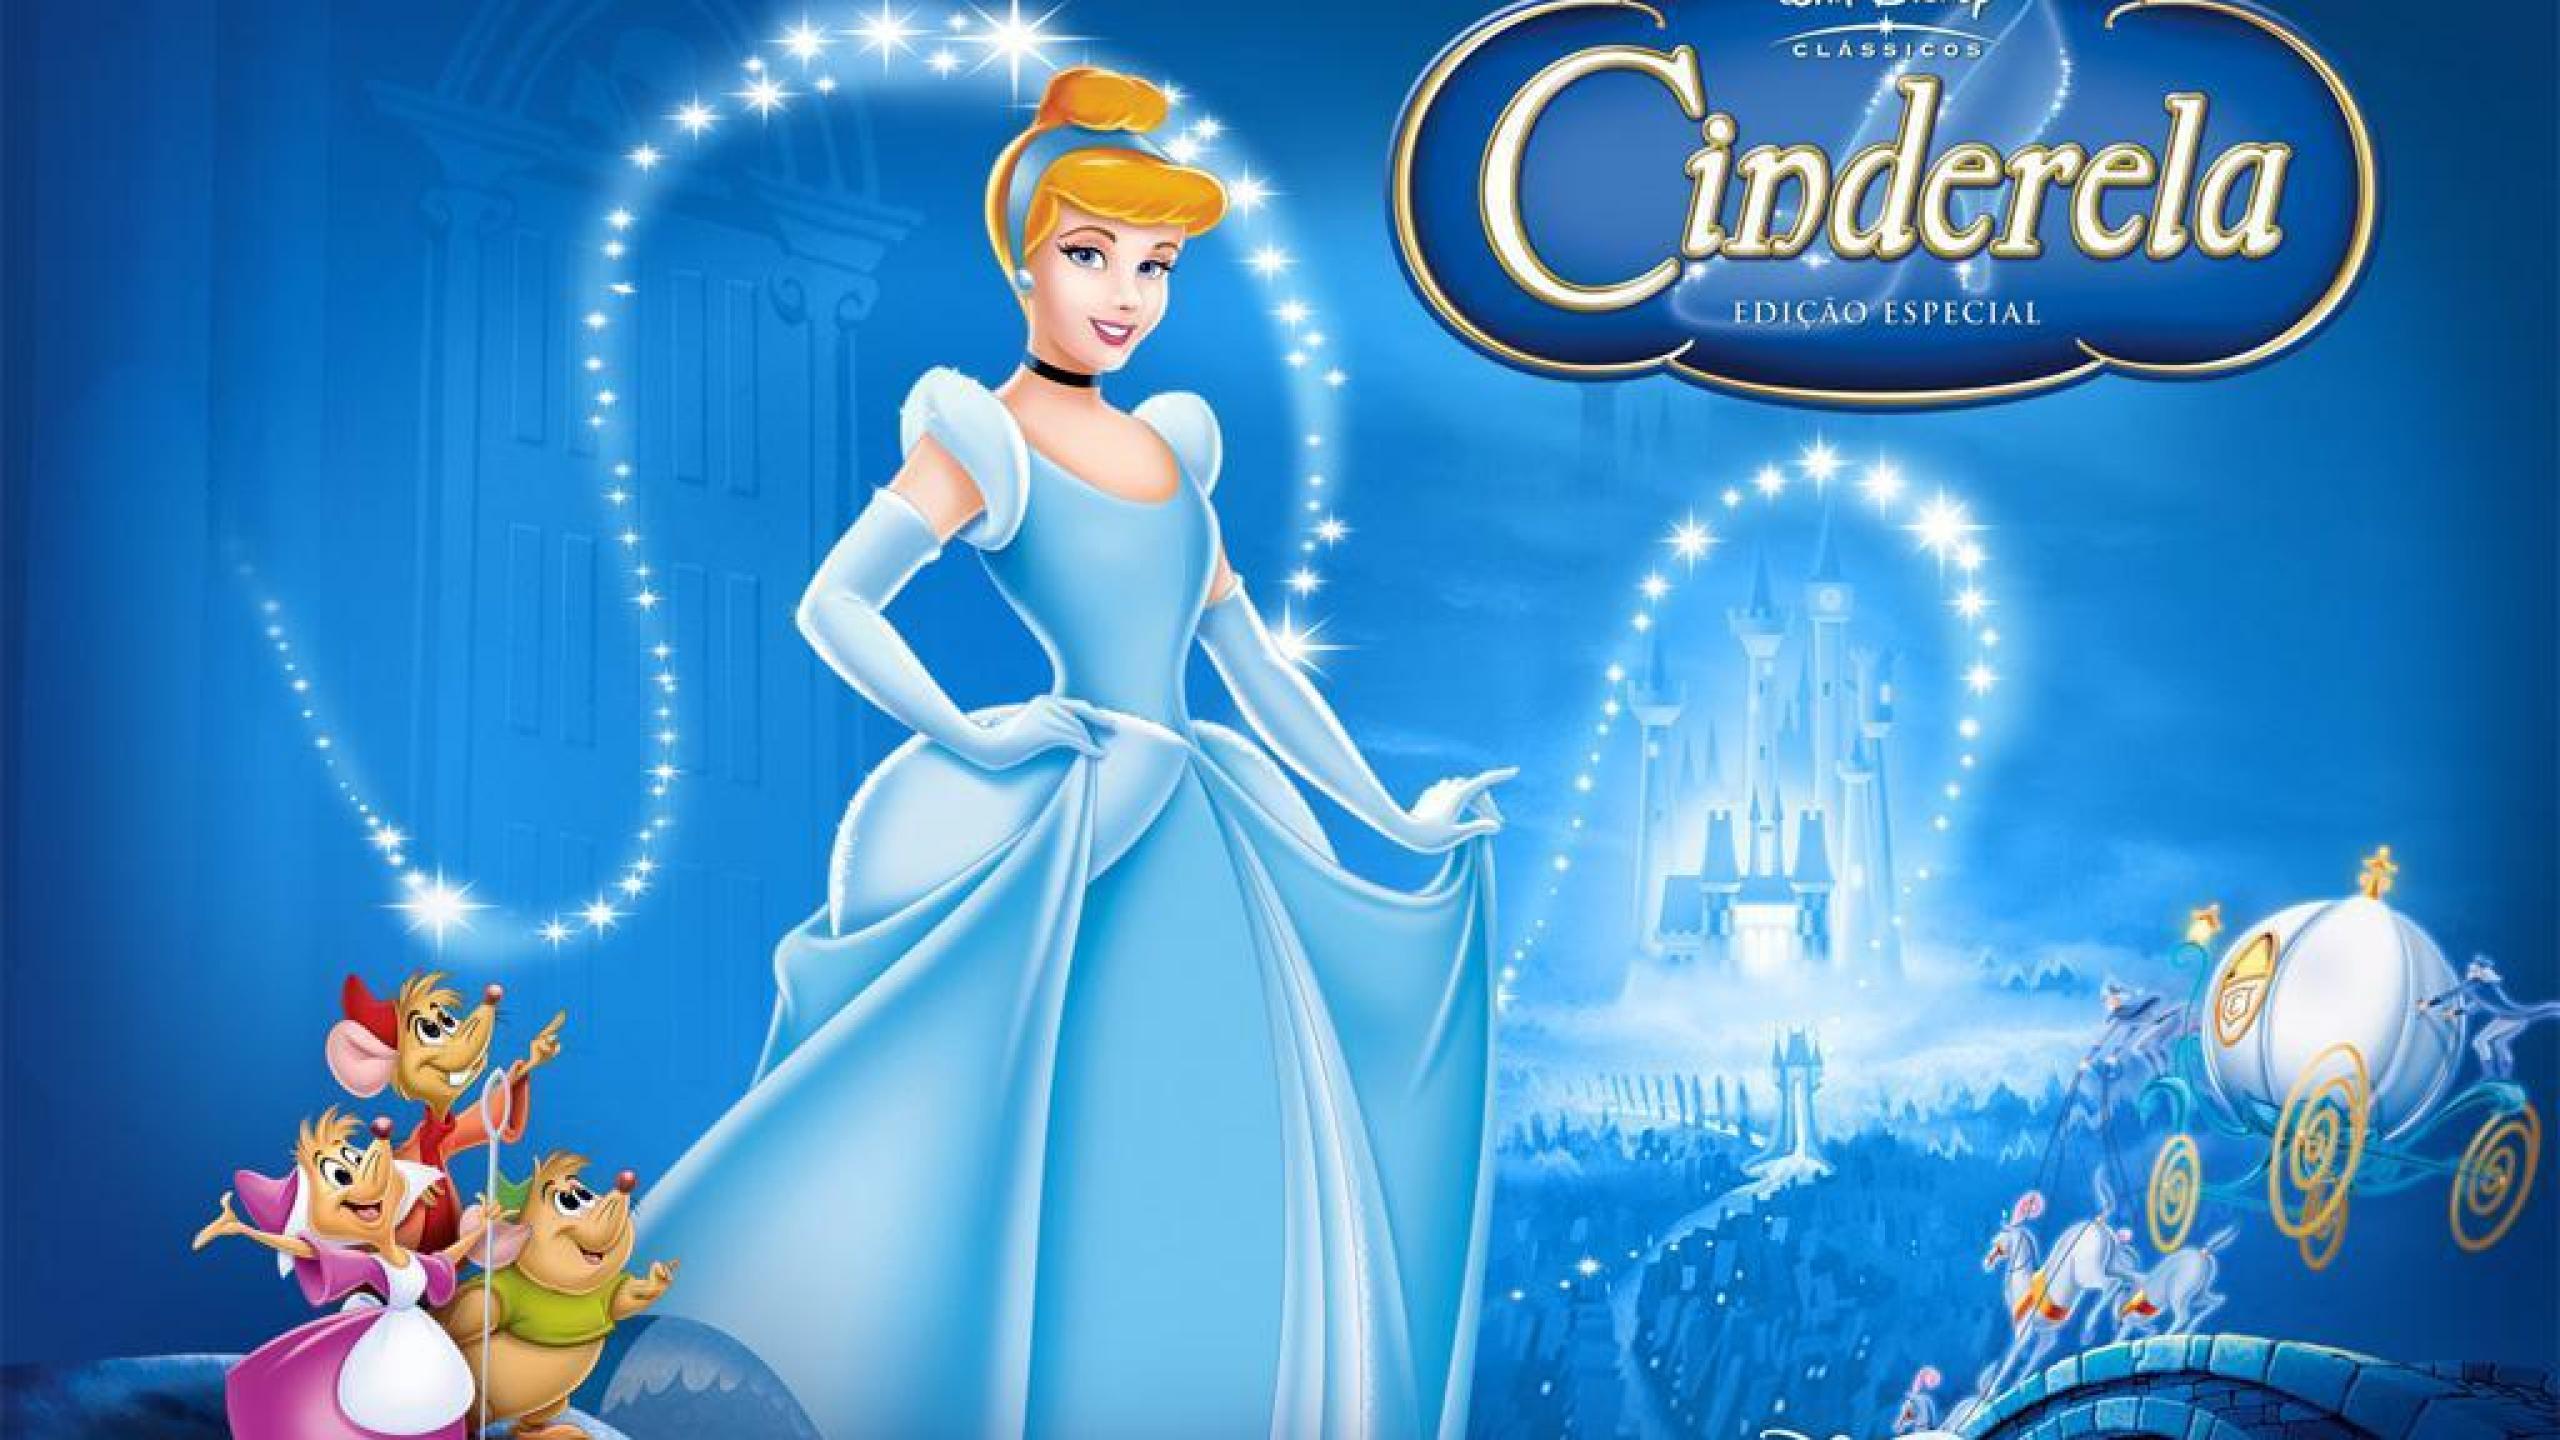 Amazing Cinderella Pictures & Backgrounds